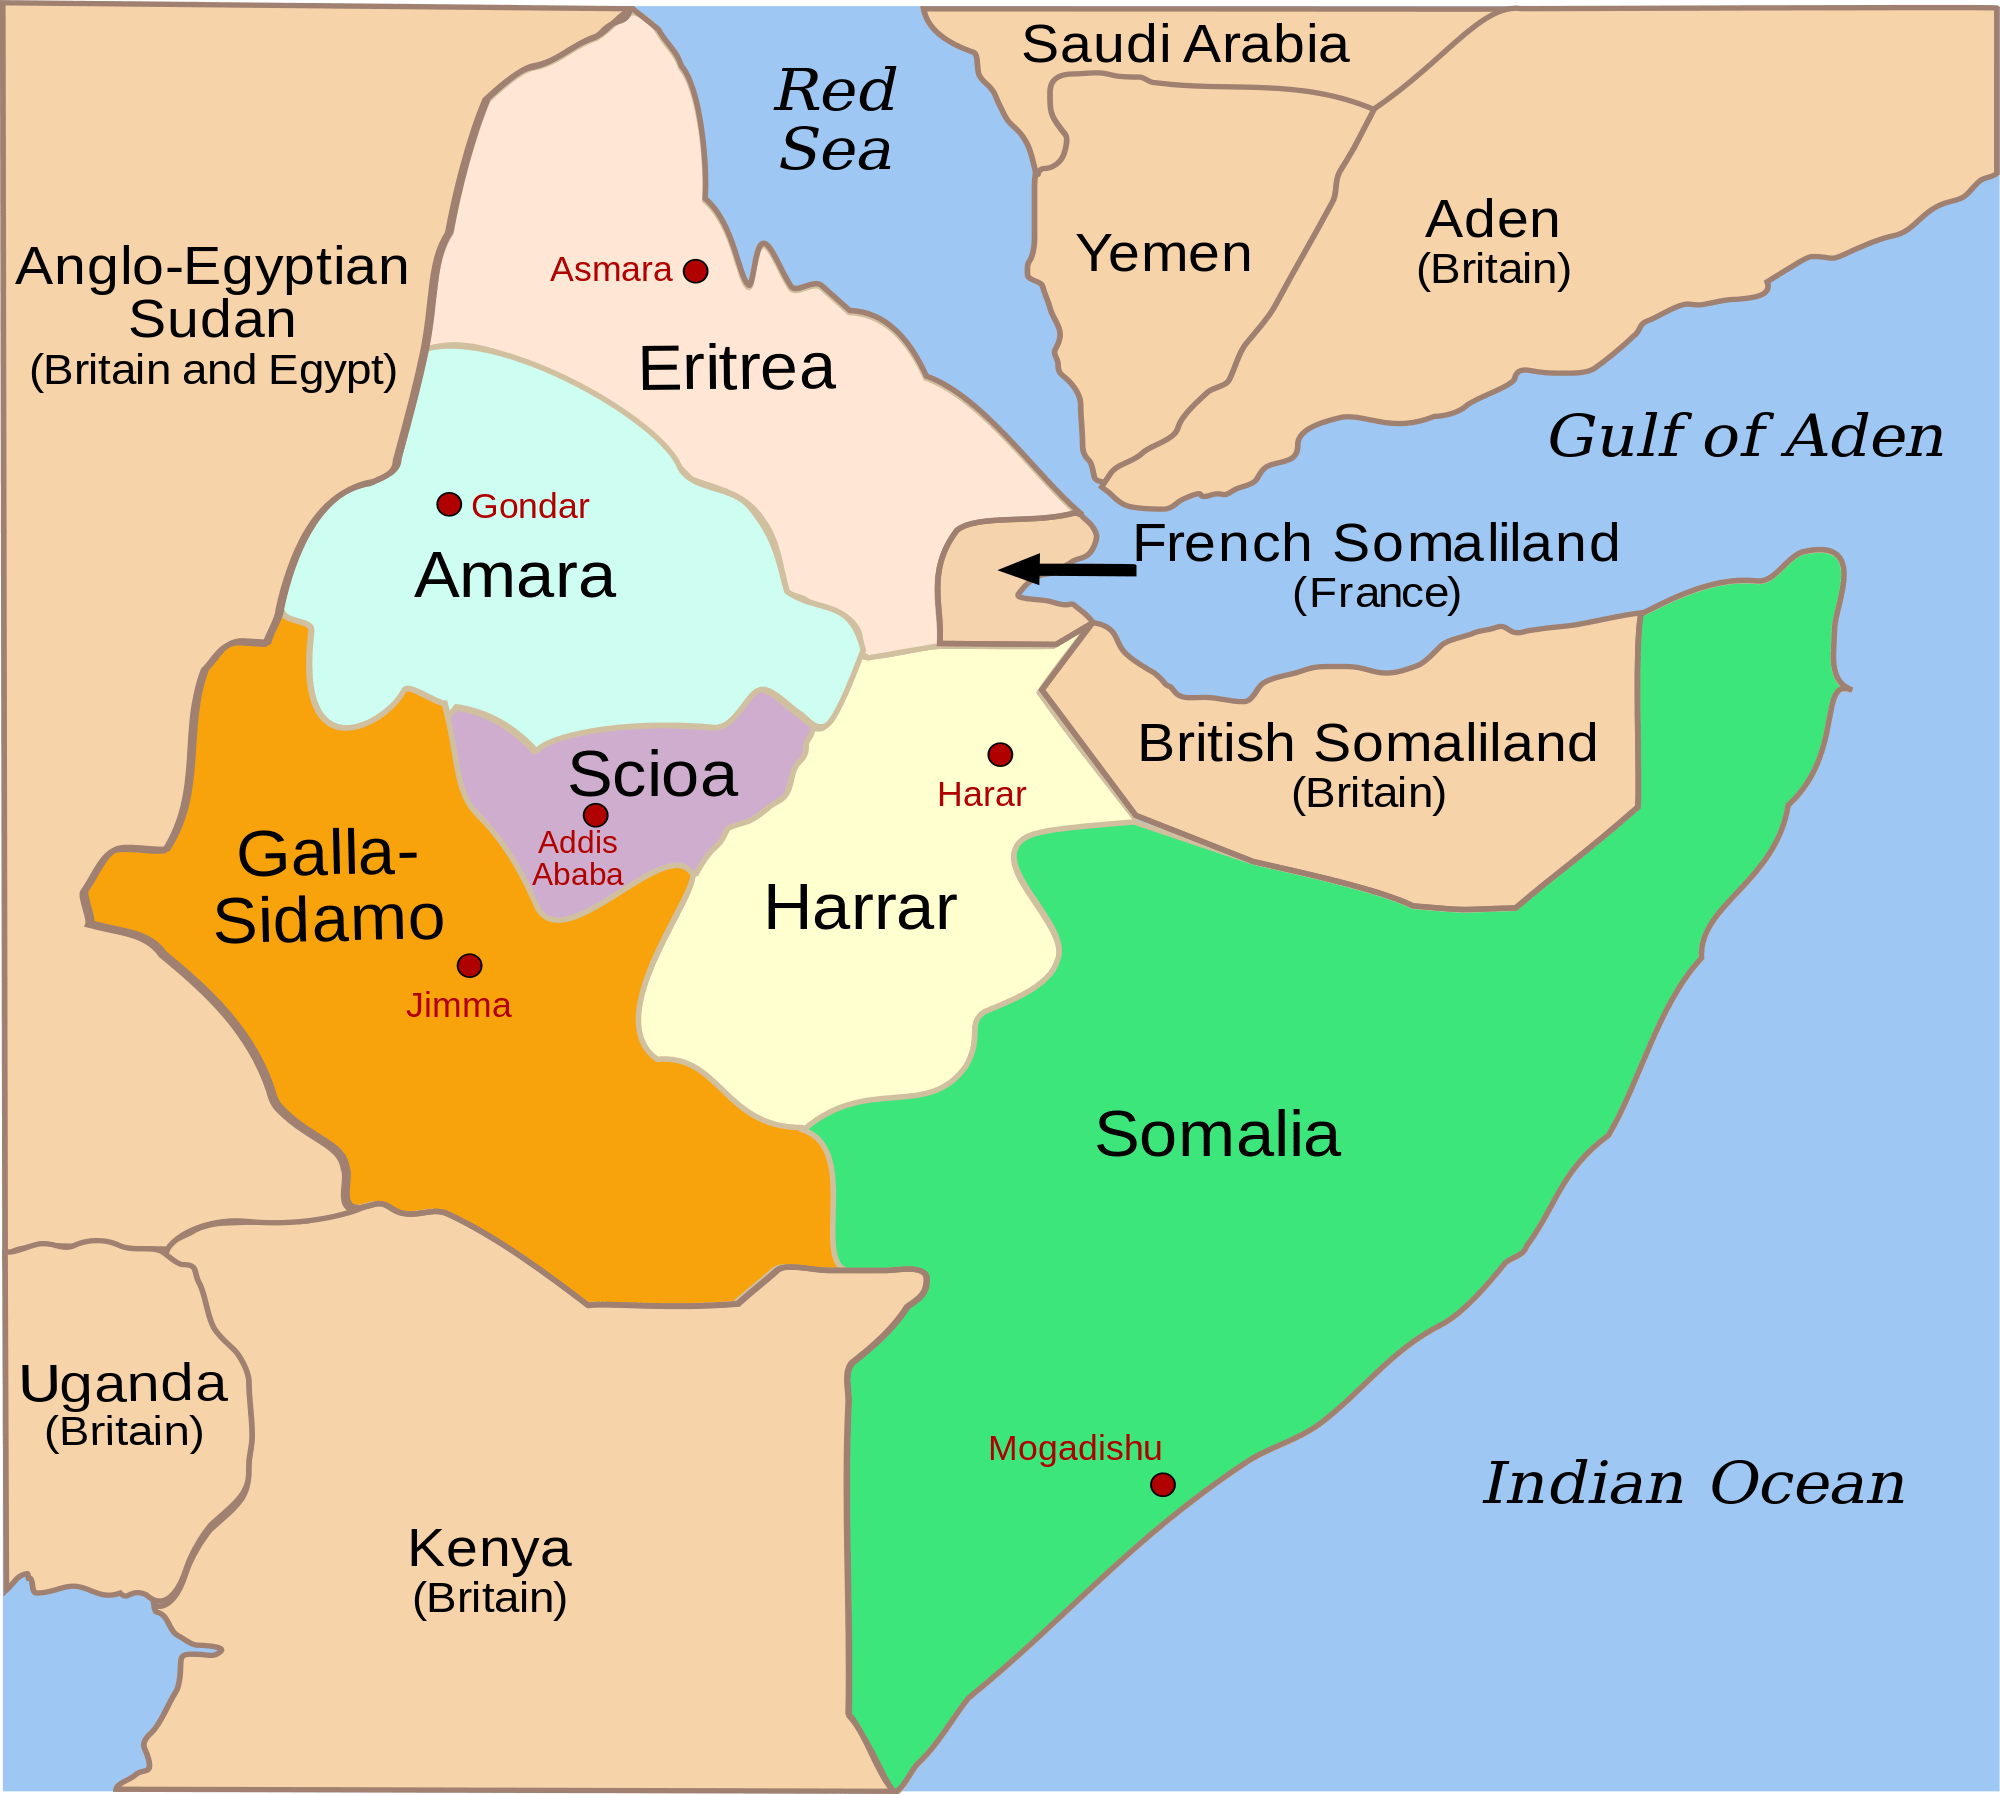 17 French Somaliland 1956 1977